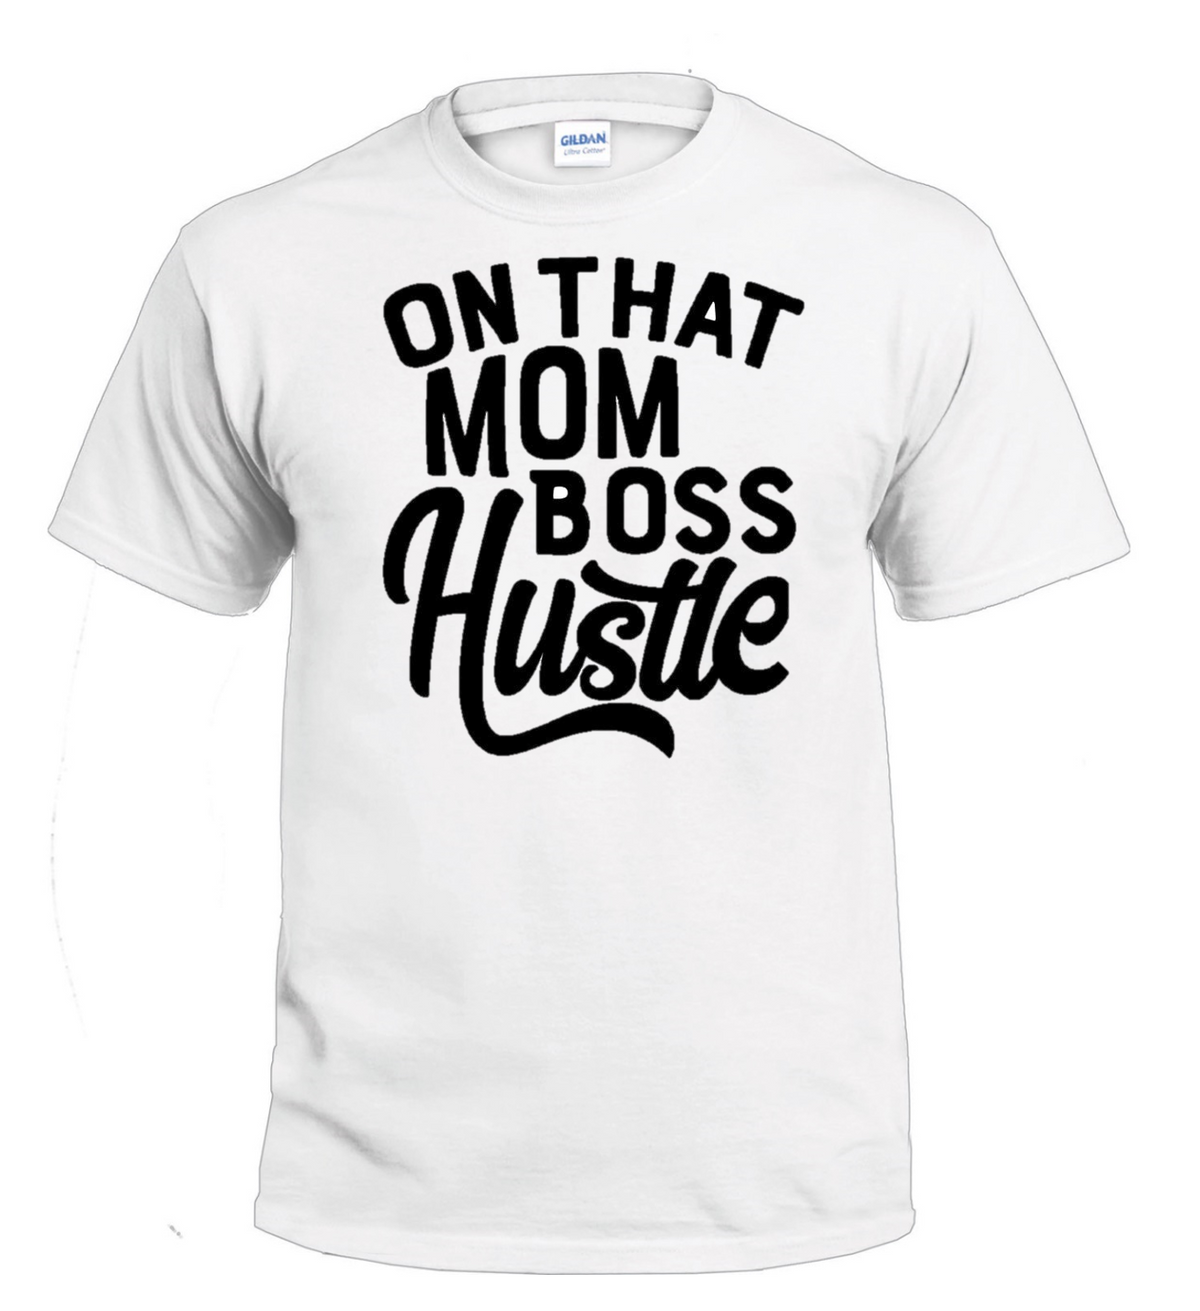 On That Mom Boss Hustle t-shirt